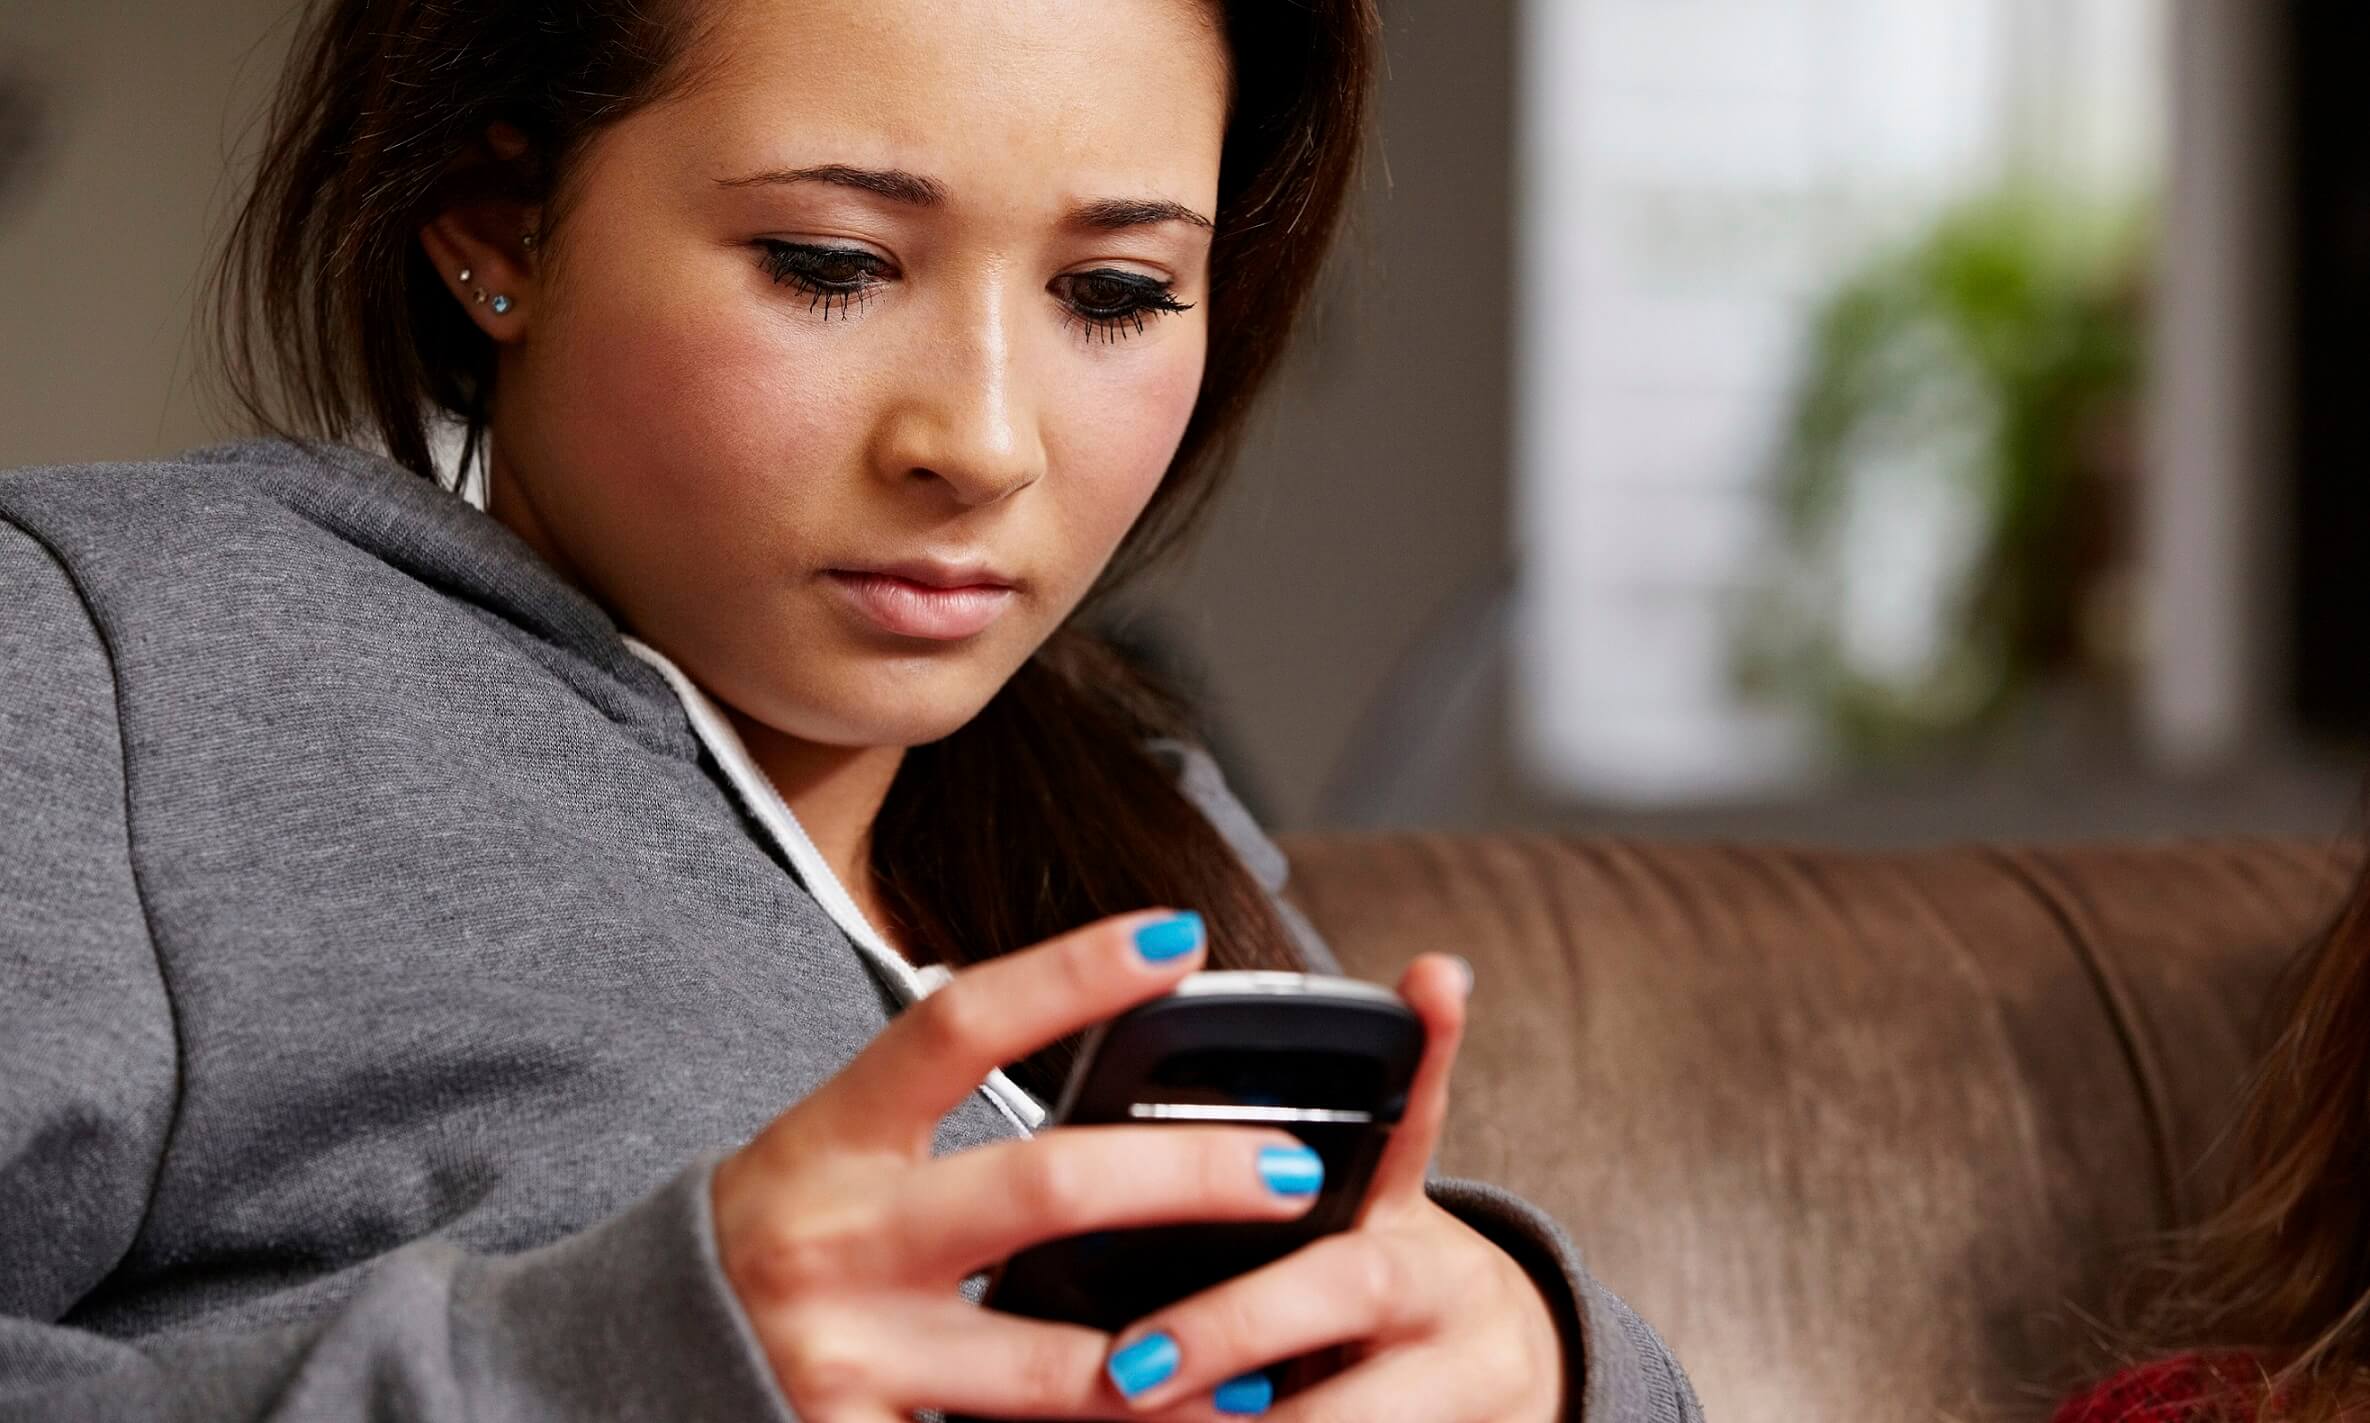 Teenage girl (16-17 years old) looking at cellphone, worried